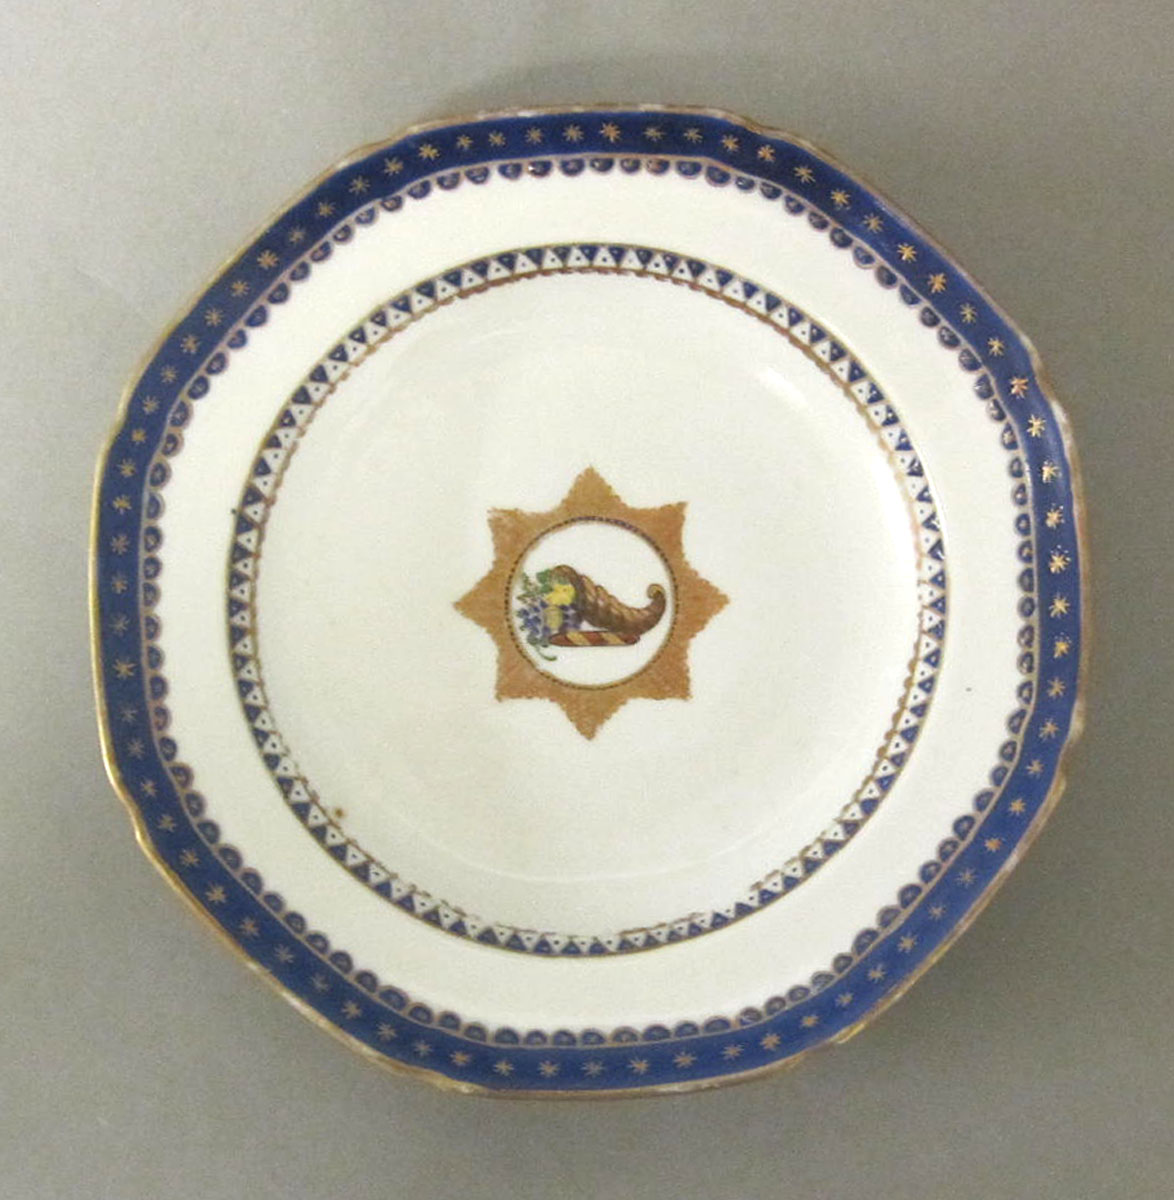 1965.0718.018 Porcelain plate